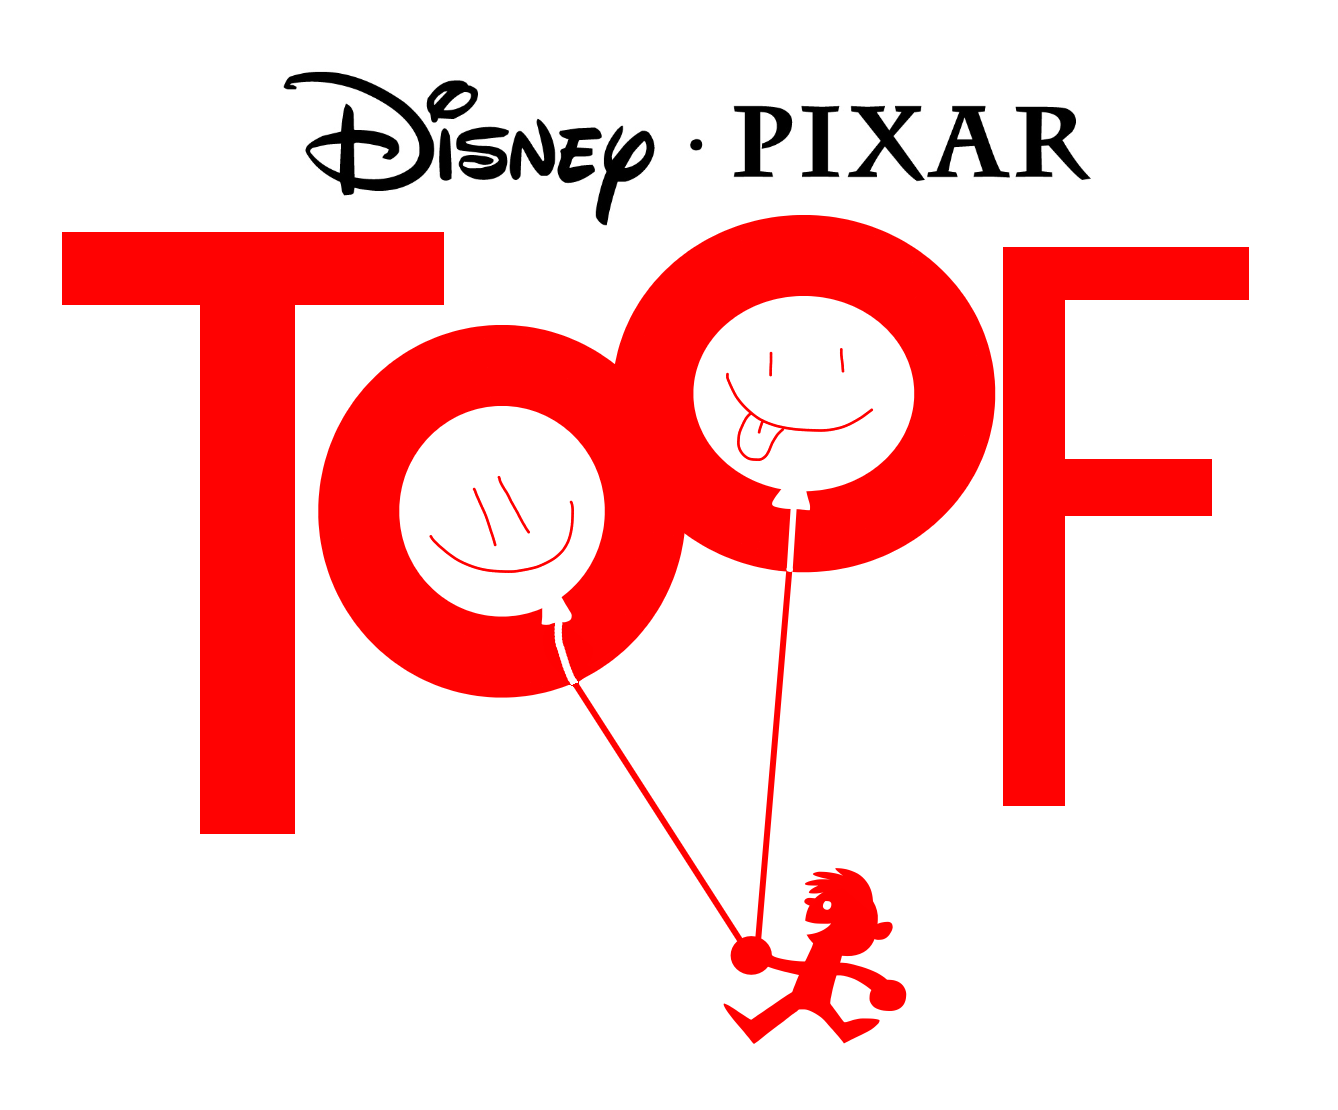 Pixar UP adventure book font? - forum